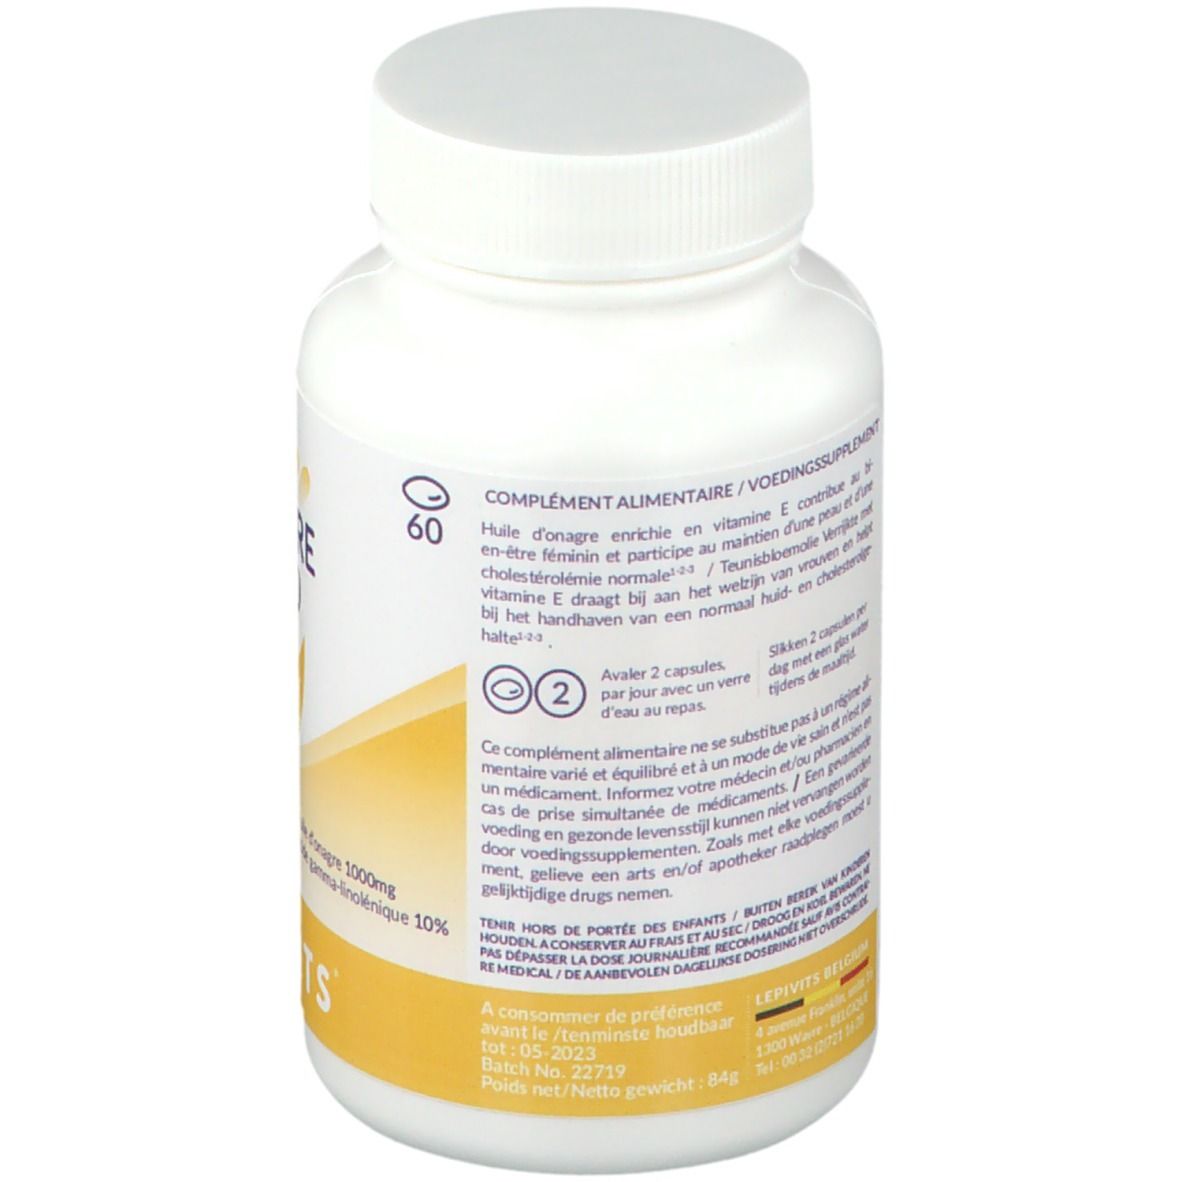 Lepivits® Teunisbloemolie 1000 mg